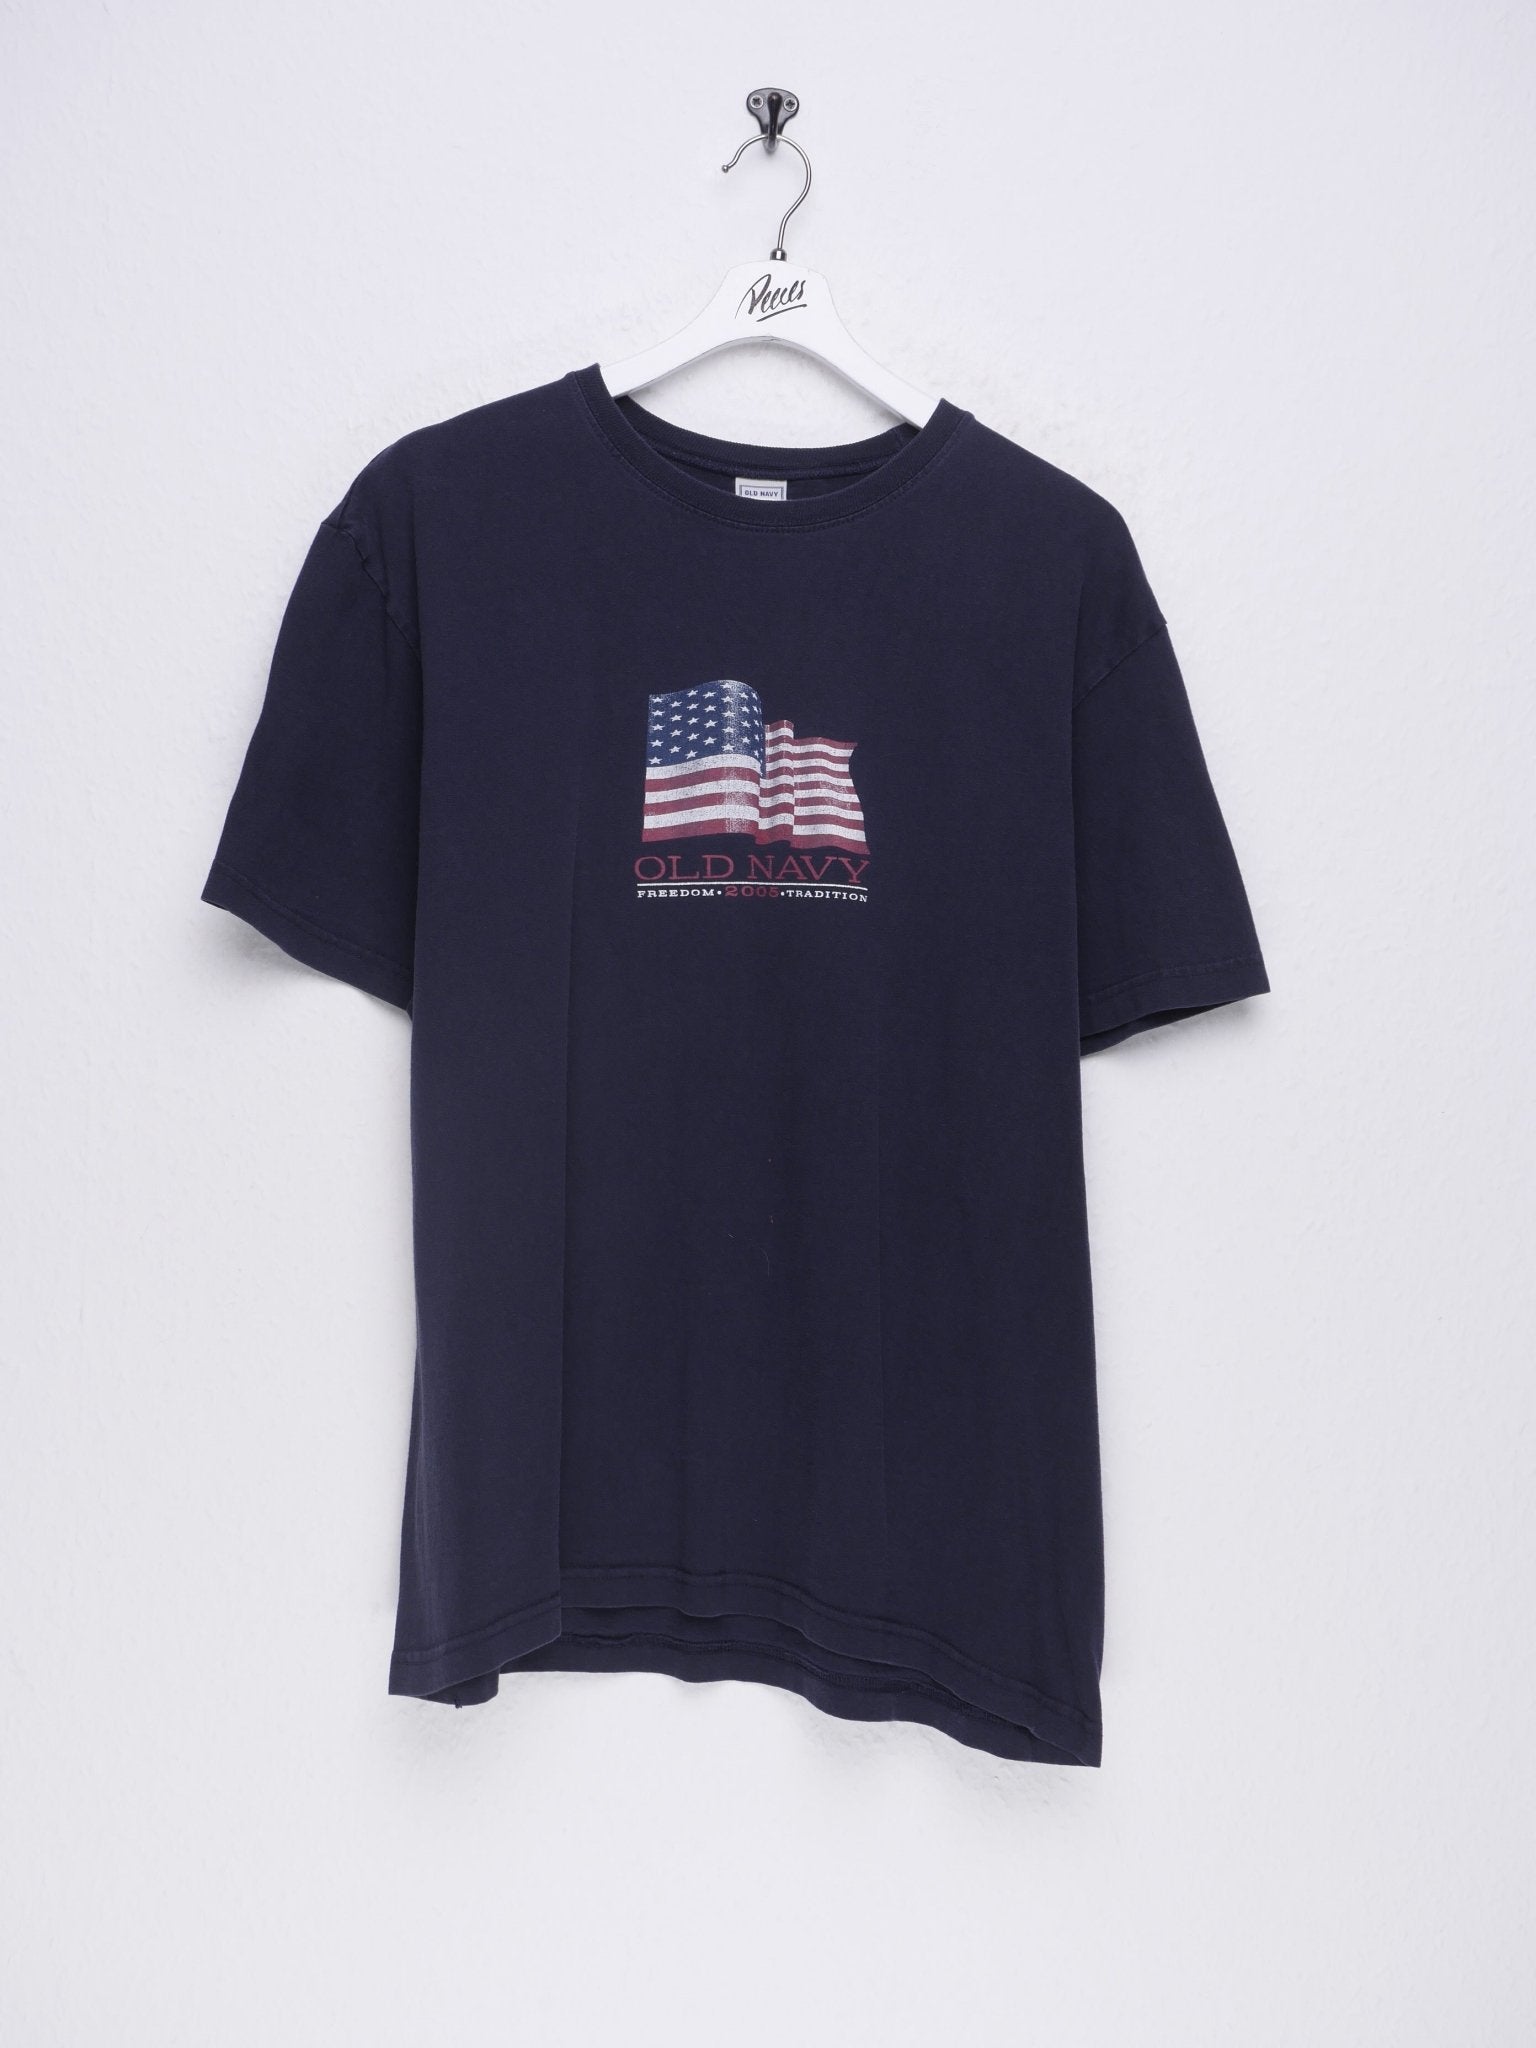 printed Logo 'Old Navy' washed navy Shirt - Peeces